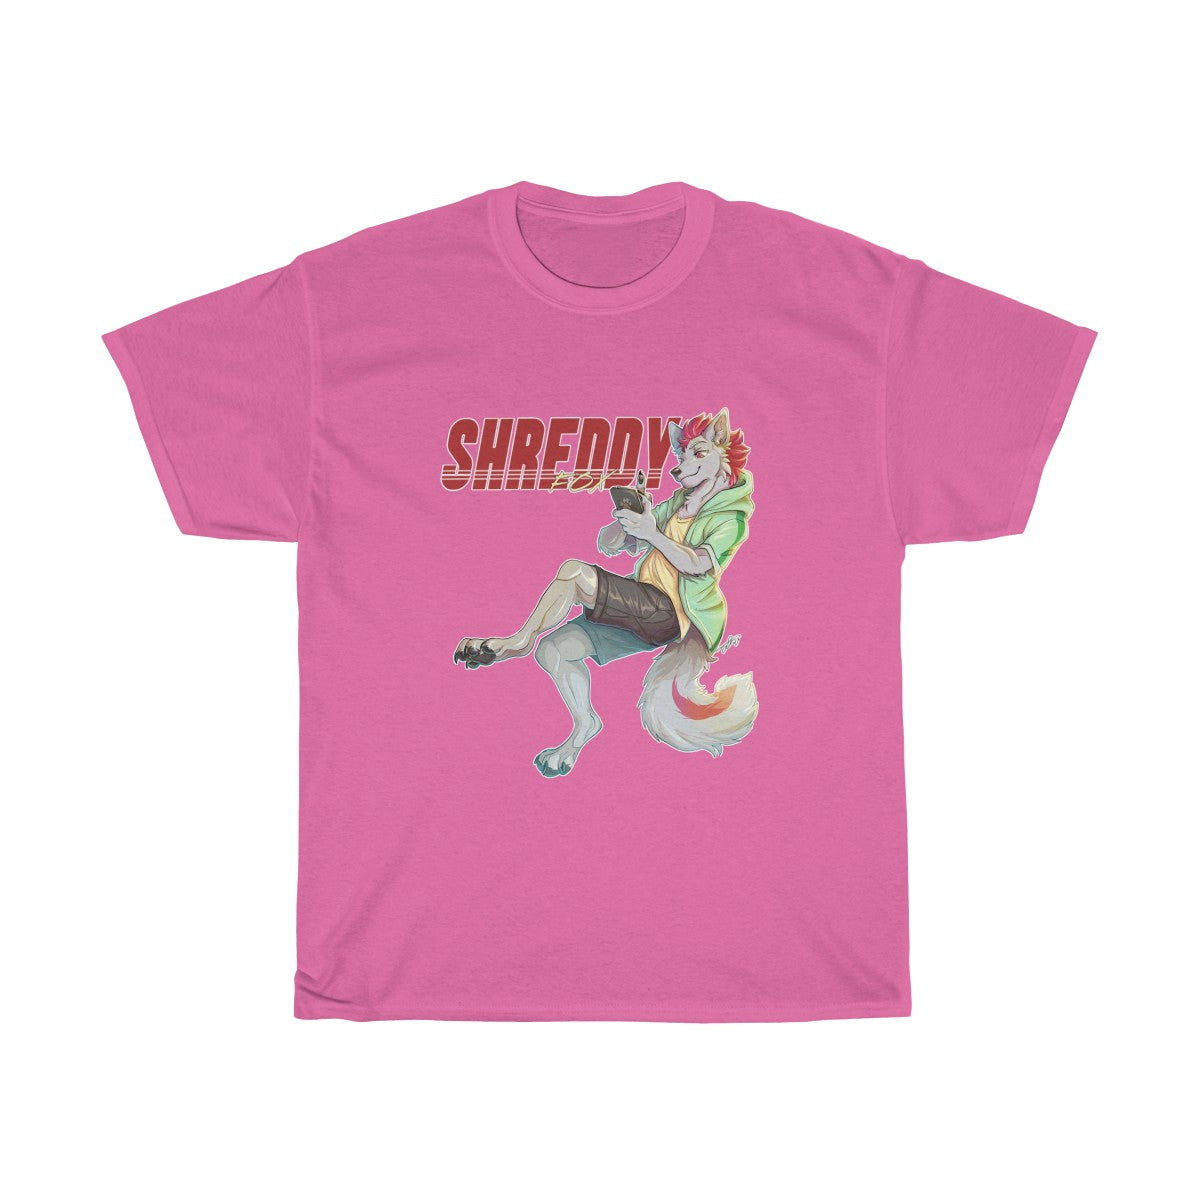 Scrolling - T-Shirt T-Shirt Shreddyfox Pink S 